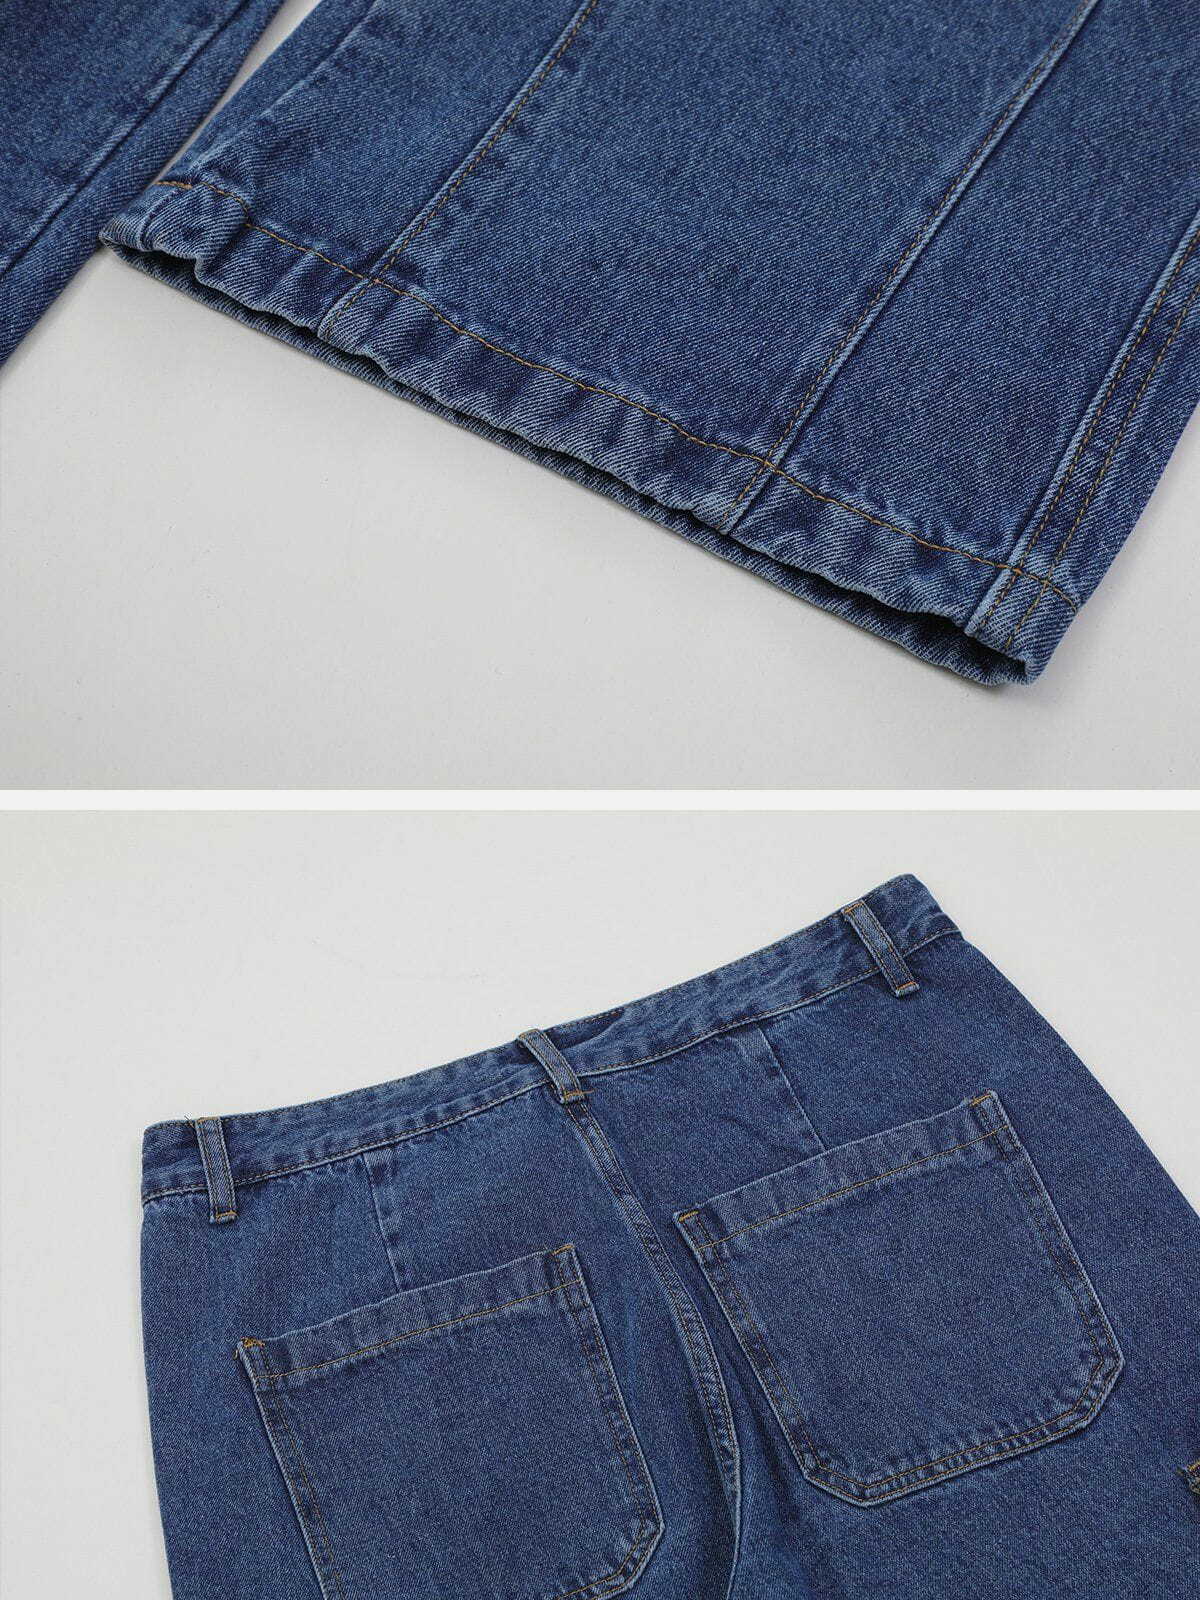 vintage patched pocket jeans edgy y2k streetwear 1497